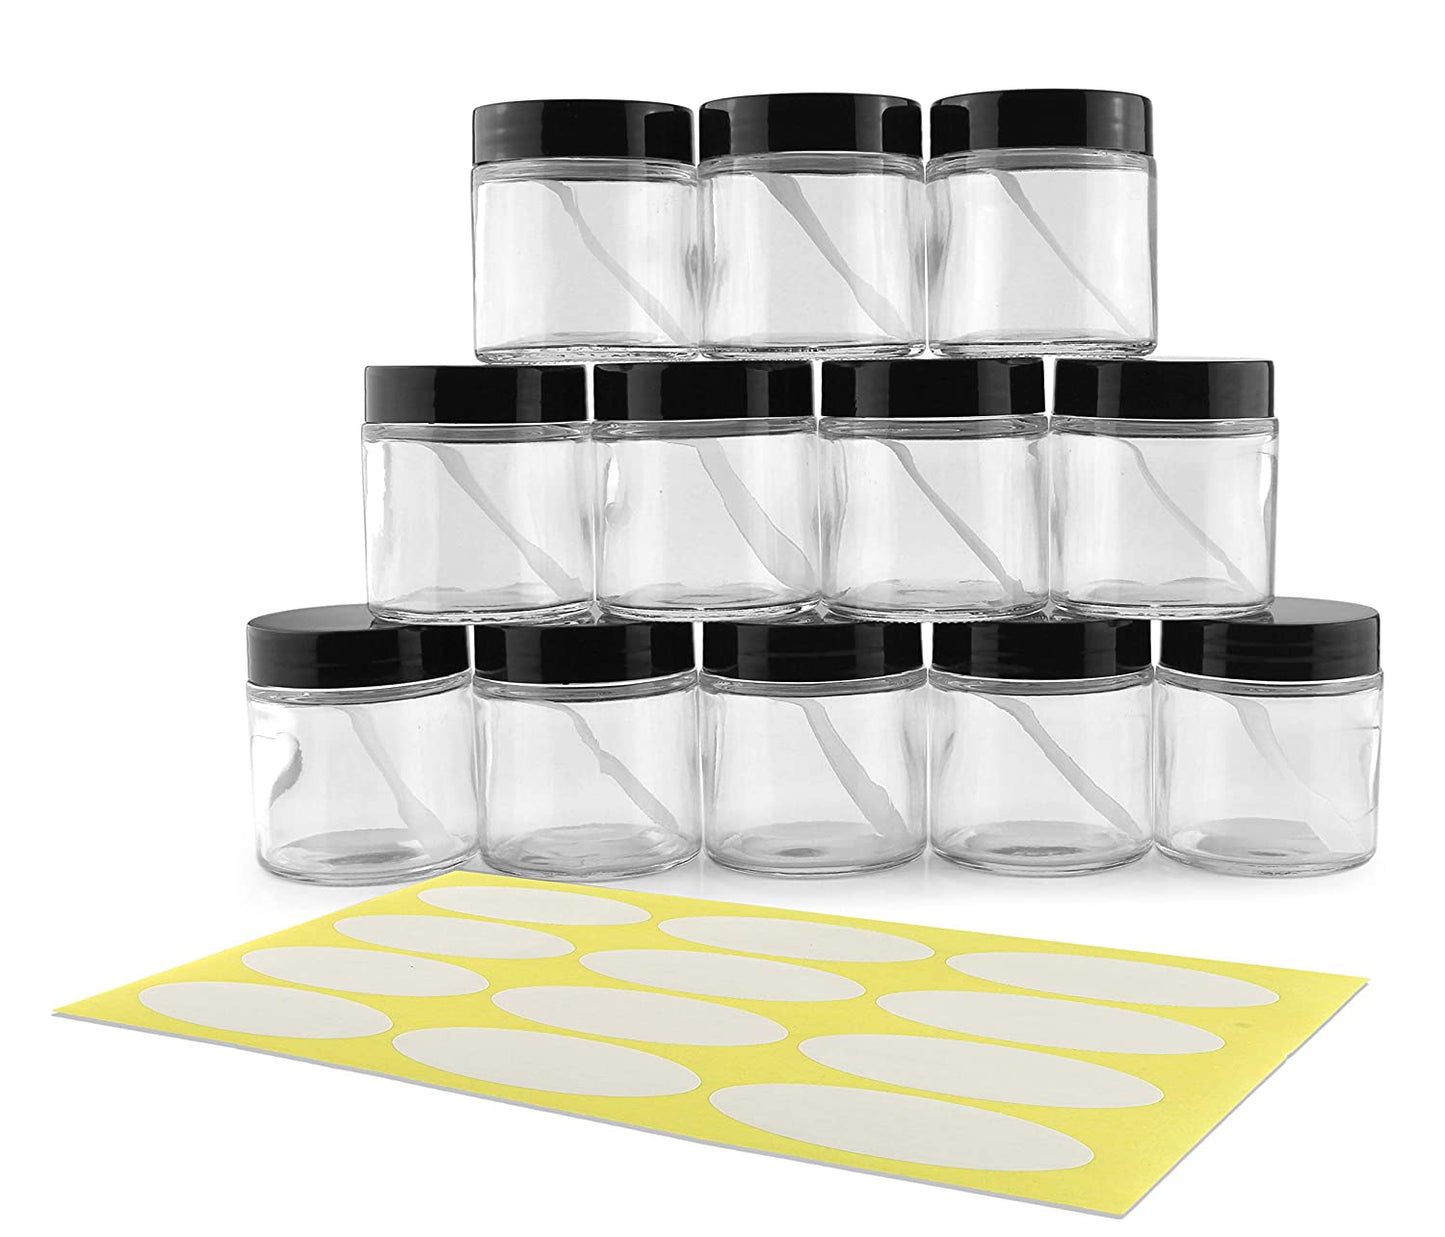 4oz Clear Glass Jars (144-Pack) - SH_1320_CASE